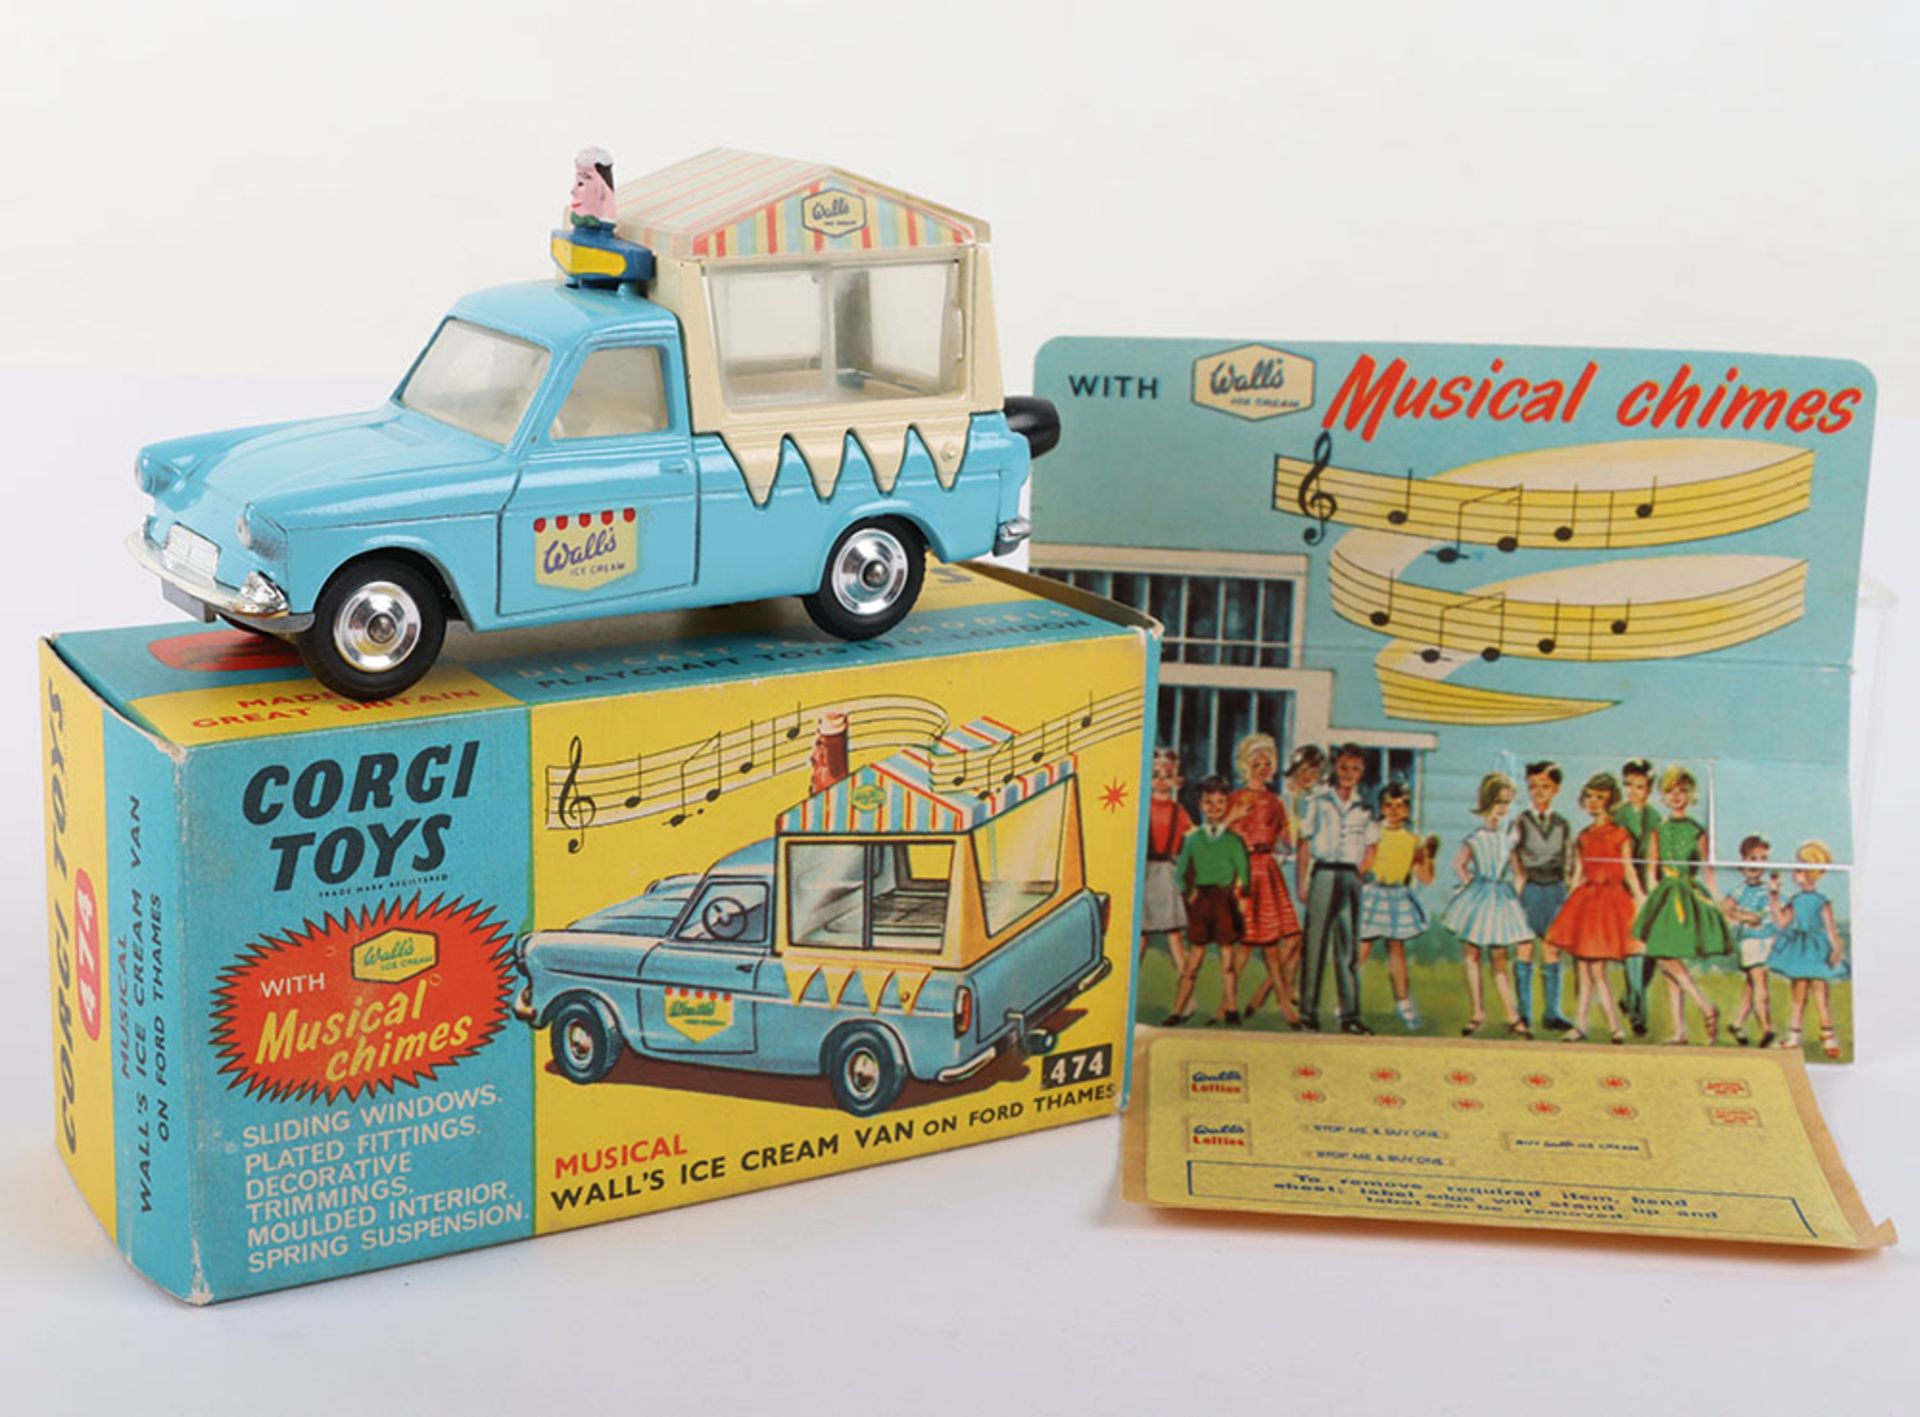 Corgi Toys Corgi Toys 474 Musical Walls Ice Cream Van on Ford Thames